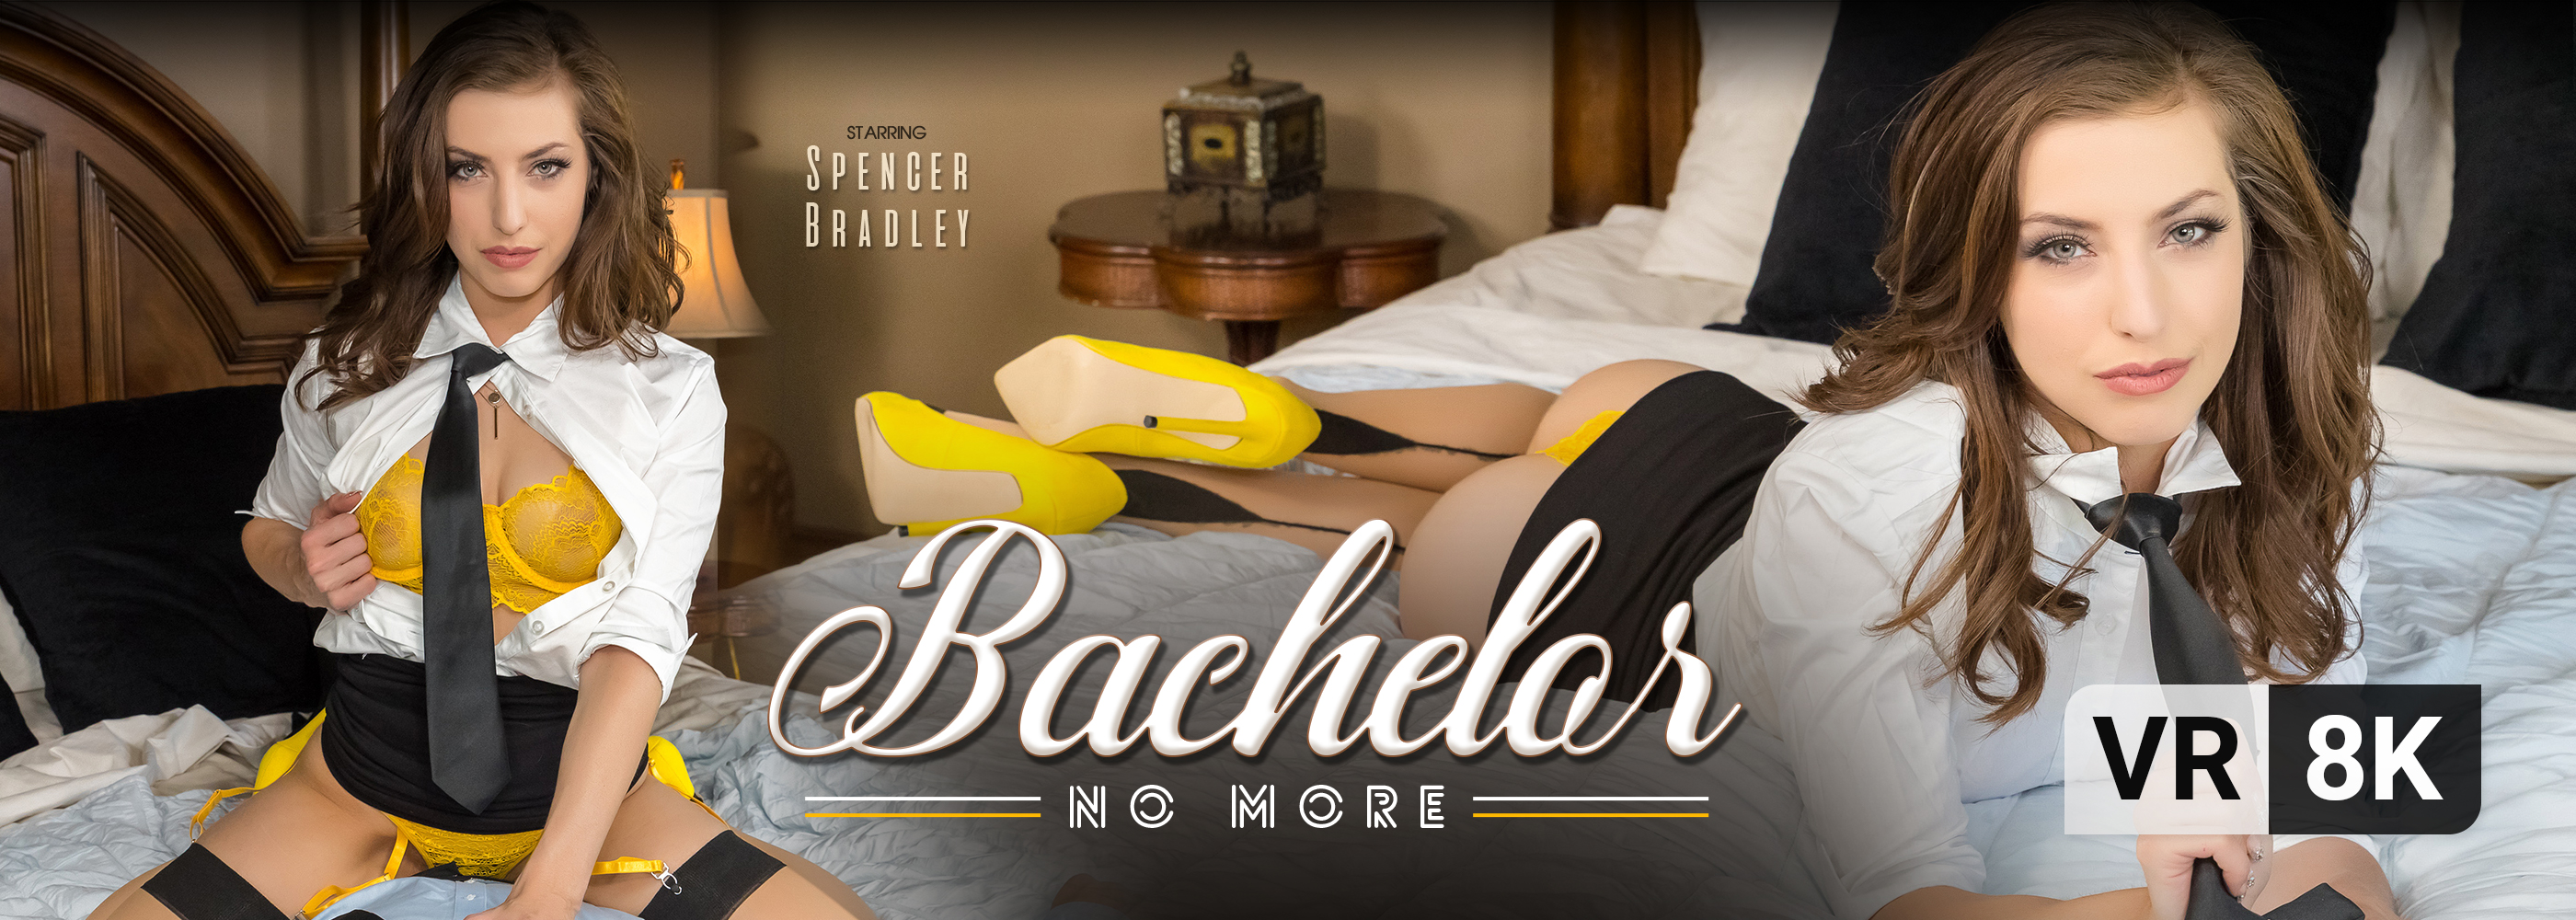 Bachelor No More with Spencer Bradley  Slideshow